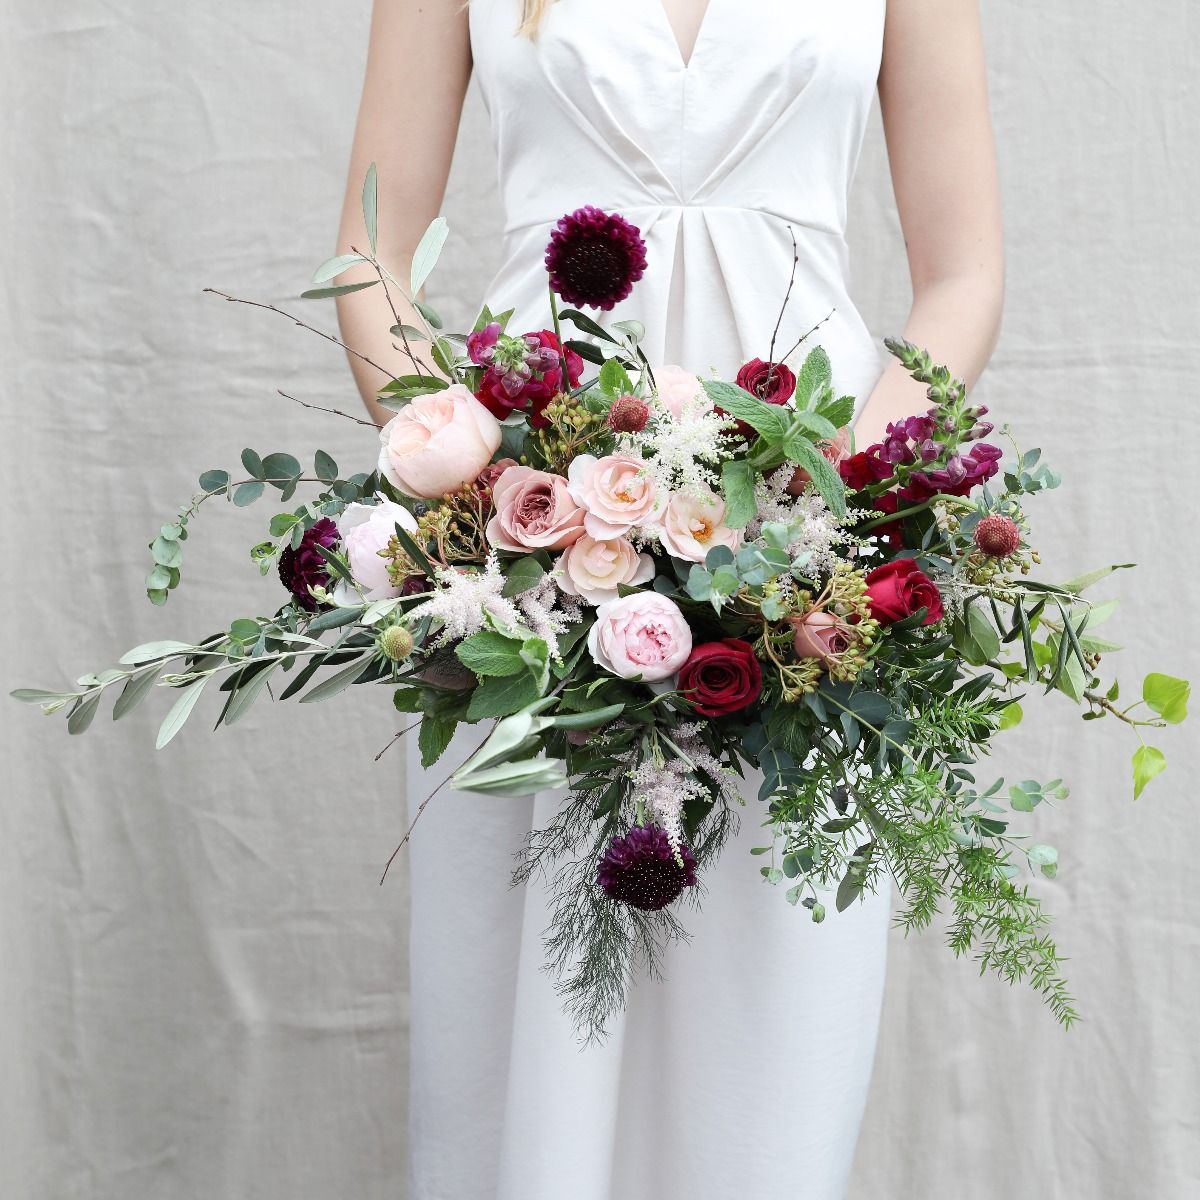 Seasonal English Flowers For Summer Weddings The Real Flower Company Blog